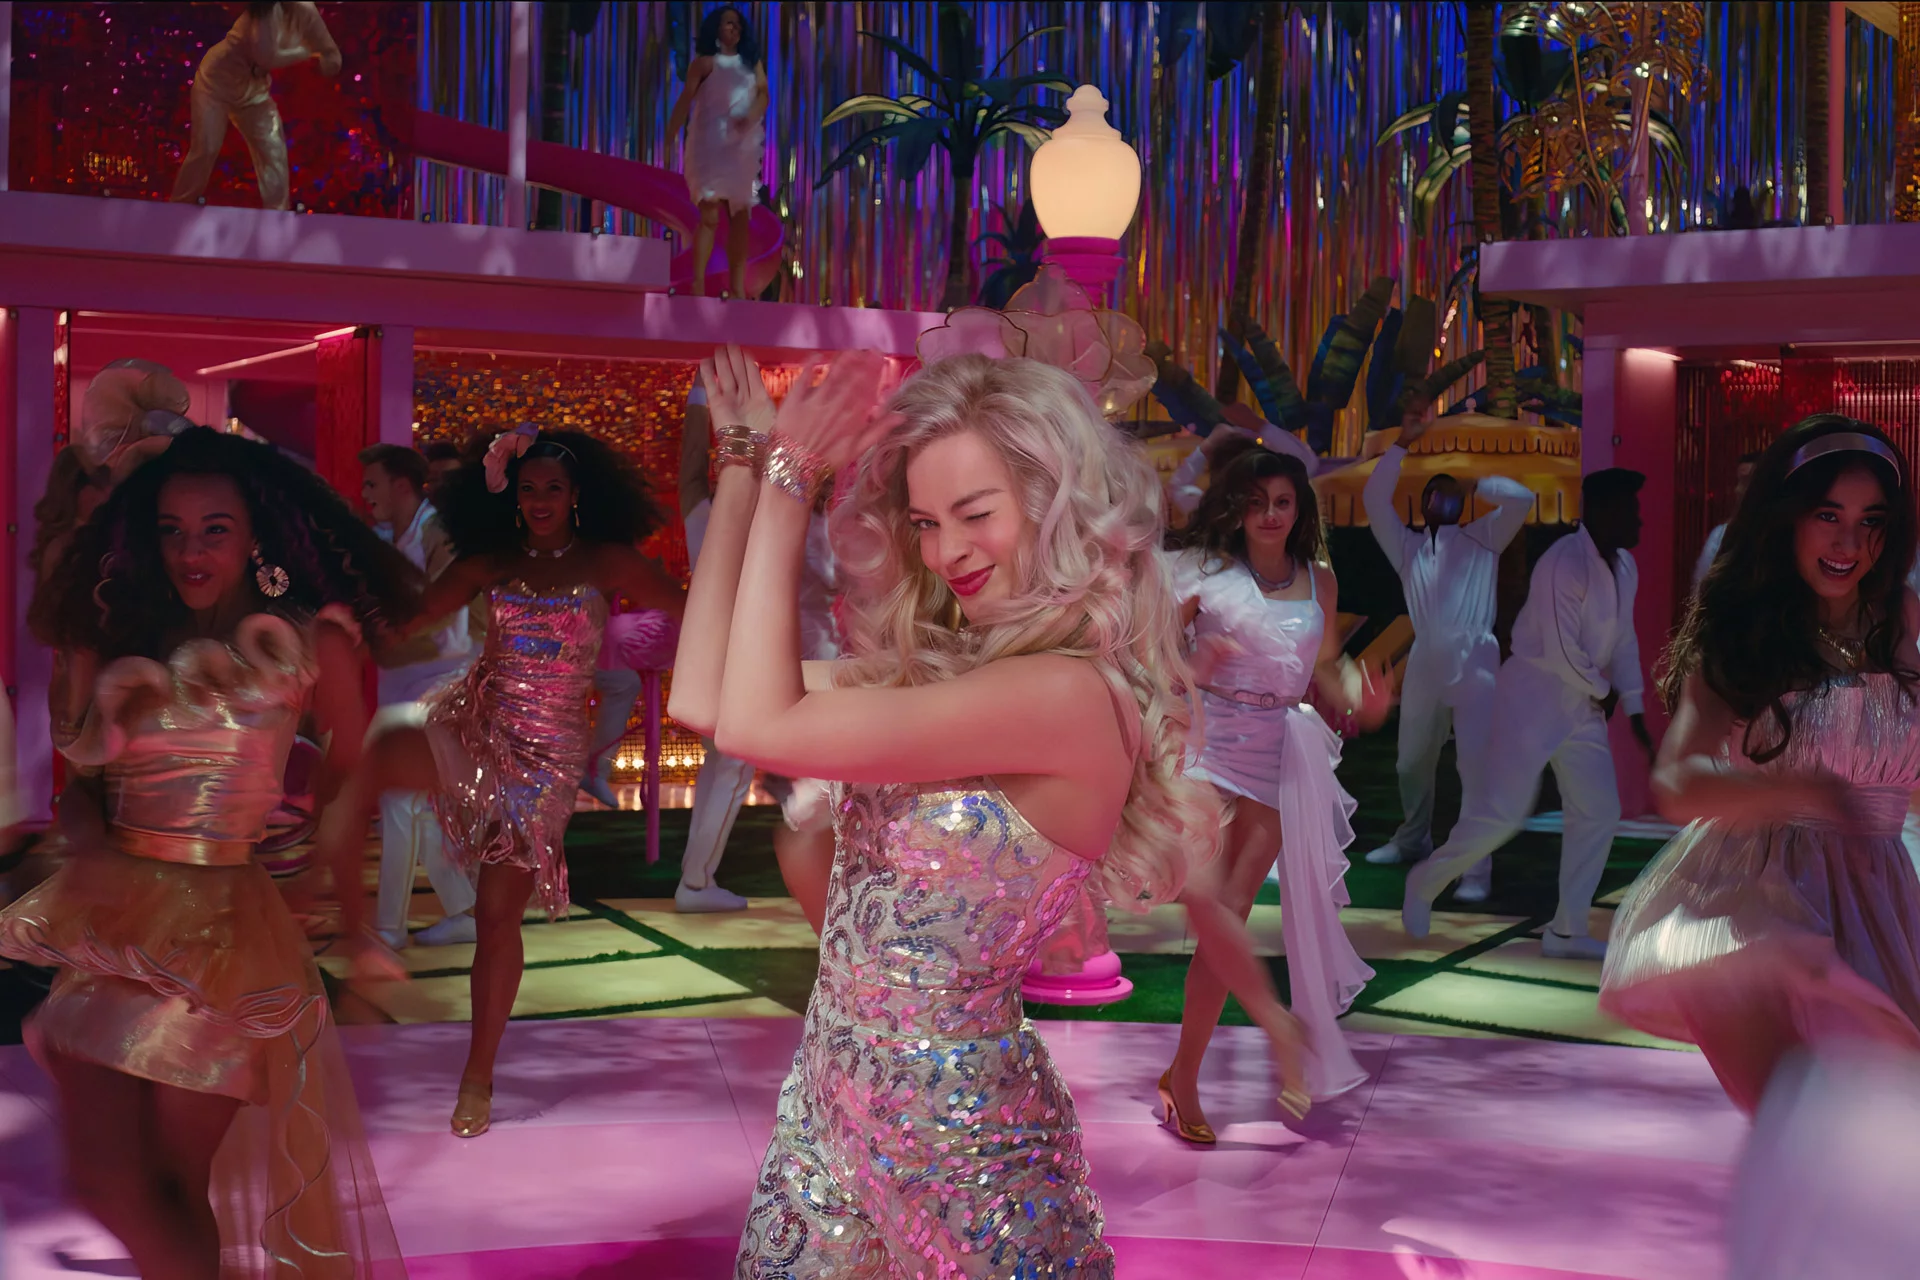 Disco Barbie dancing on the dance floor in the new movie.